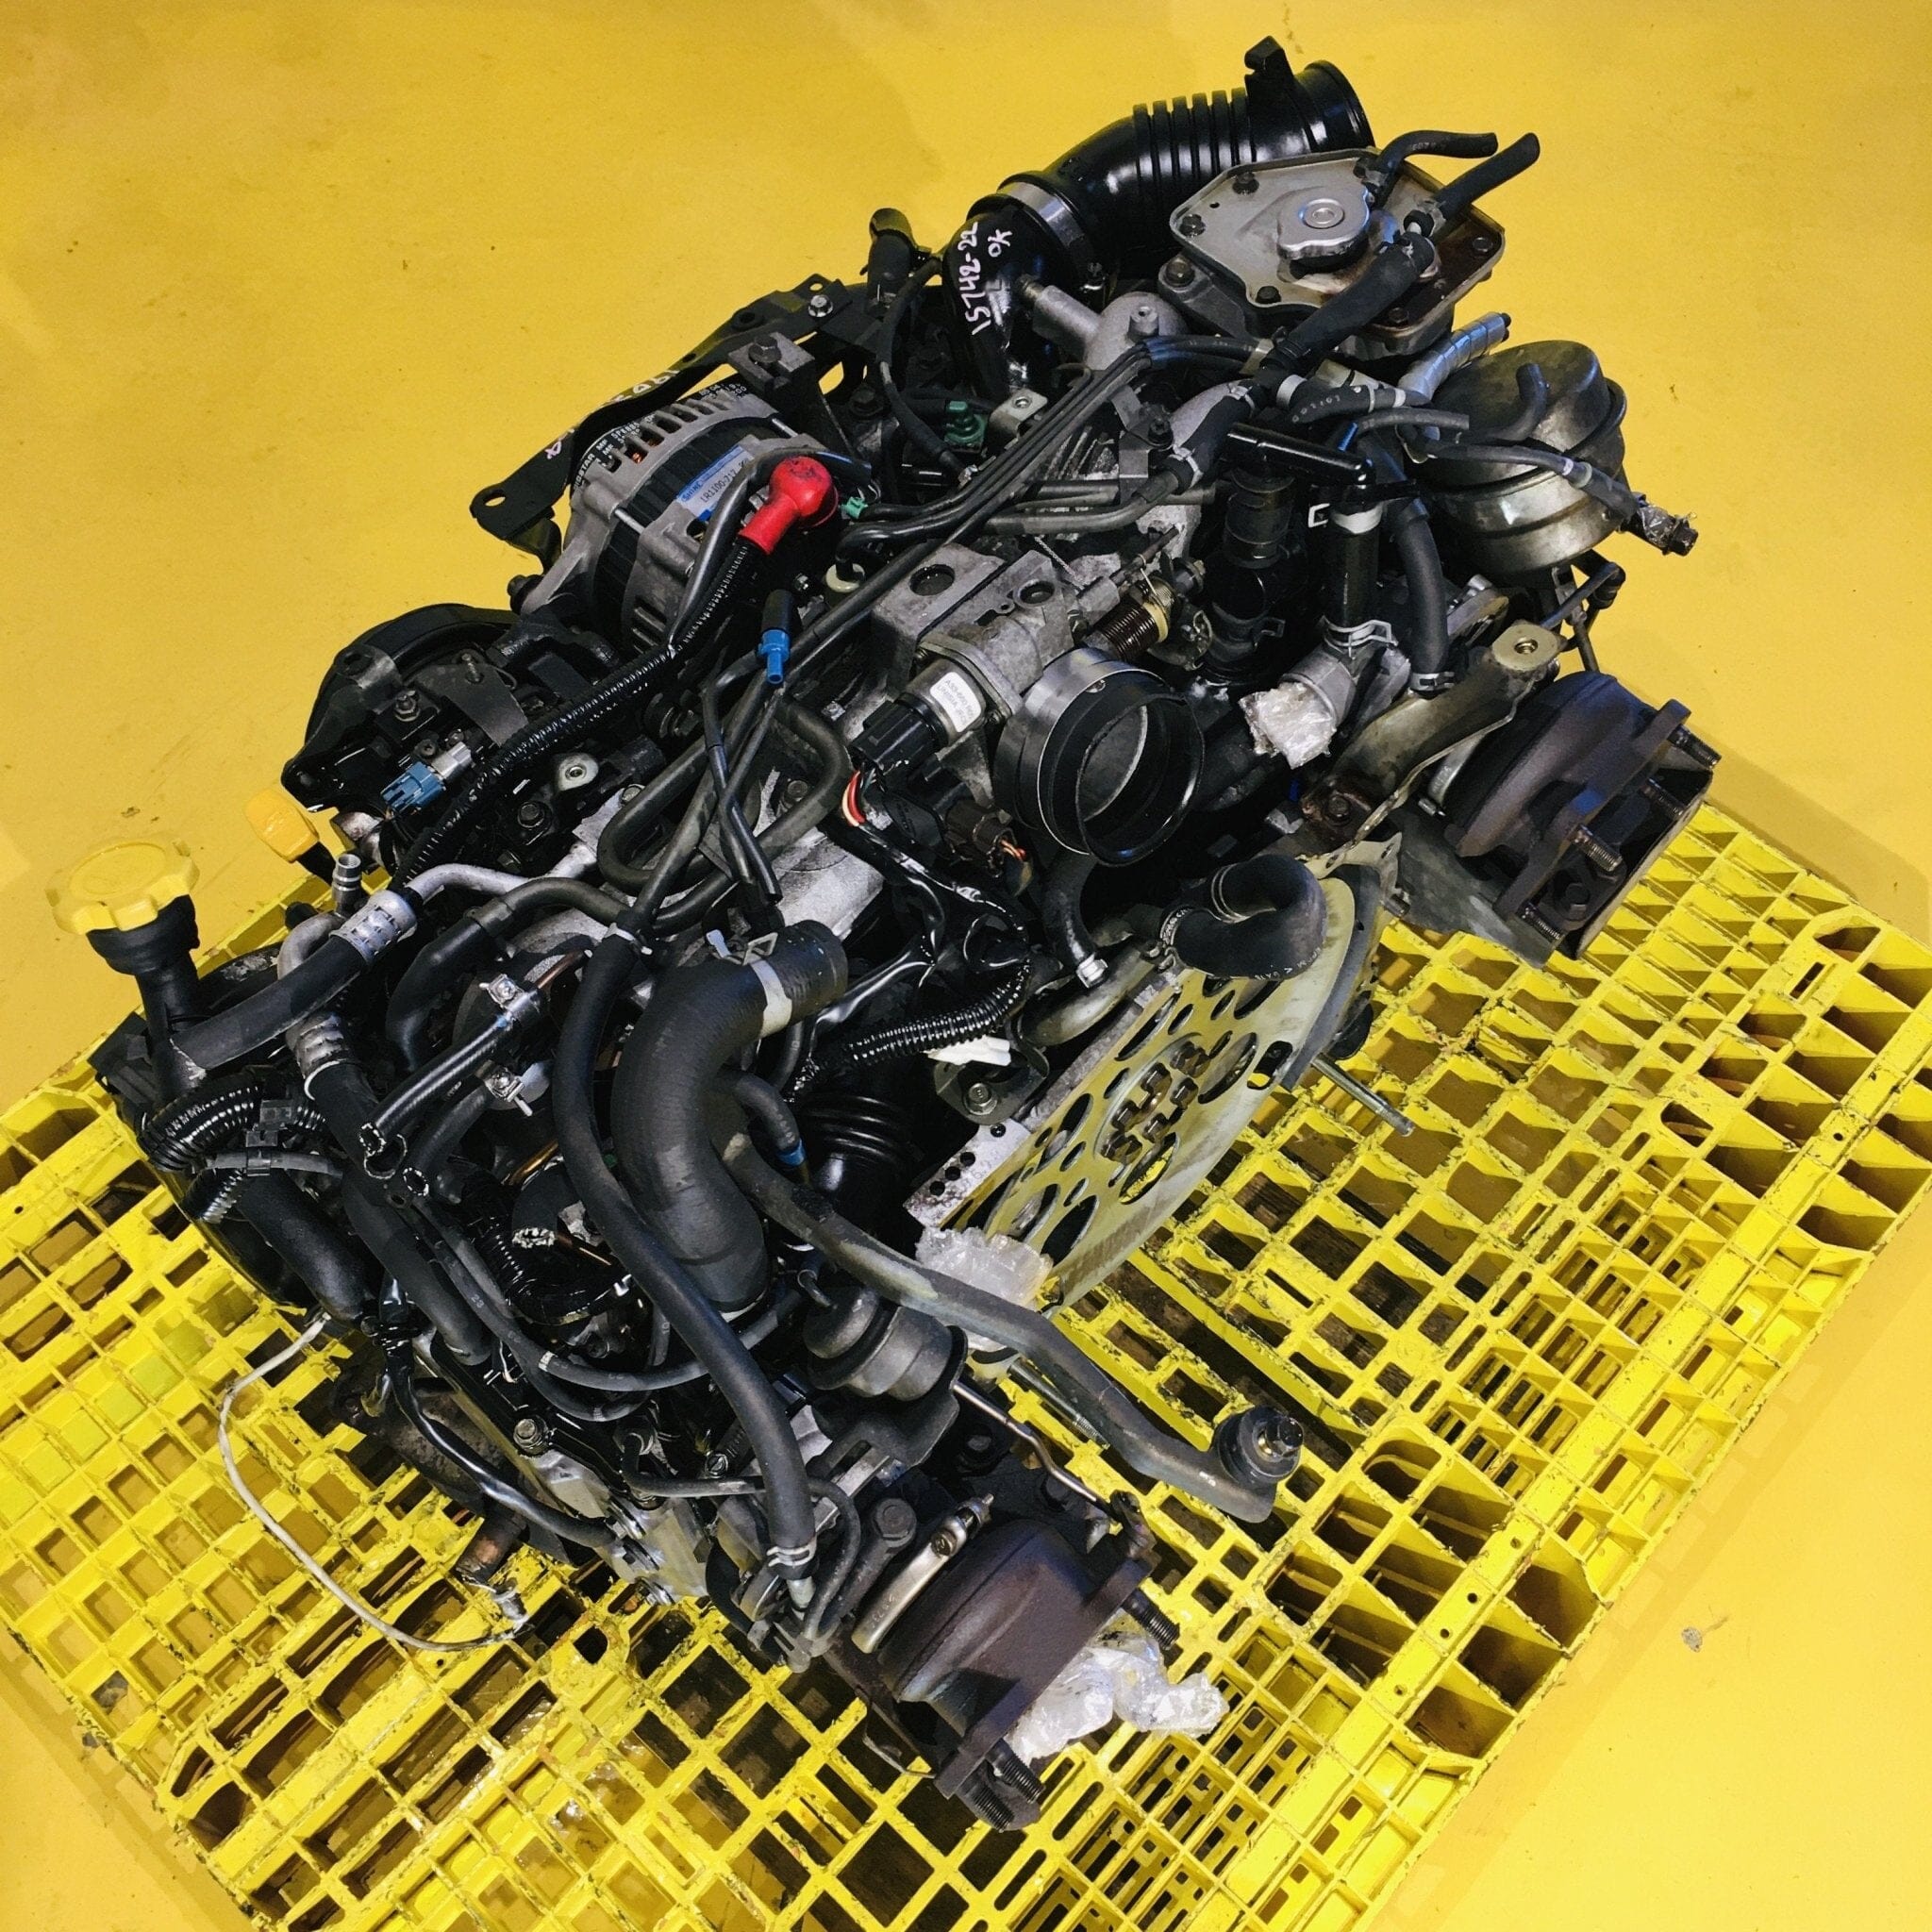 SUBARU LEGACY GT (2004-2005) 2.0L TURBO JDM ENGINE ACTUAL SWAP 